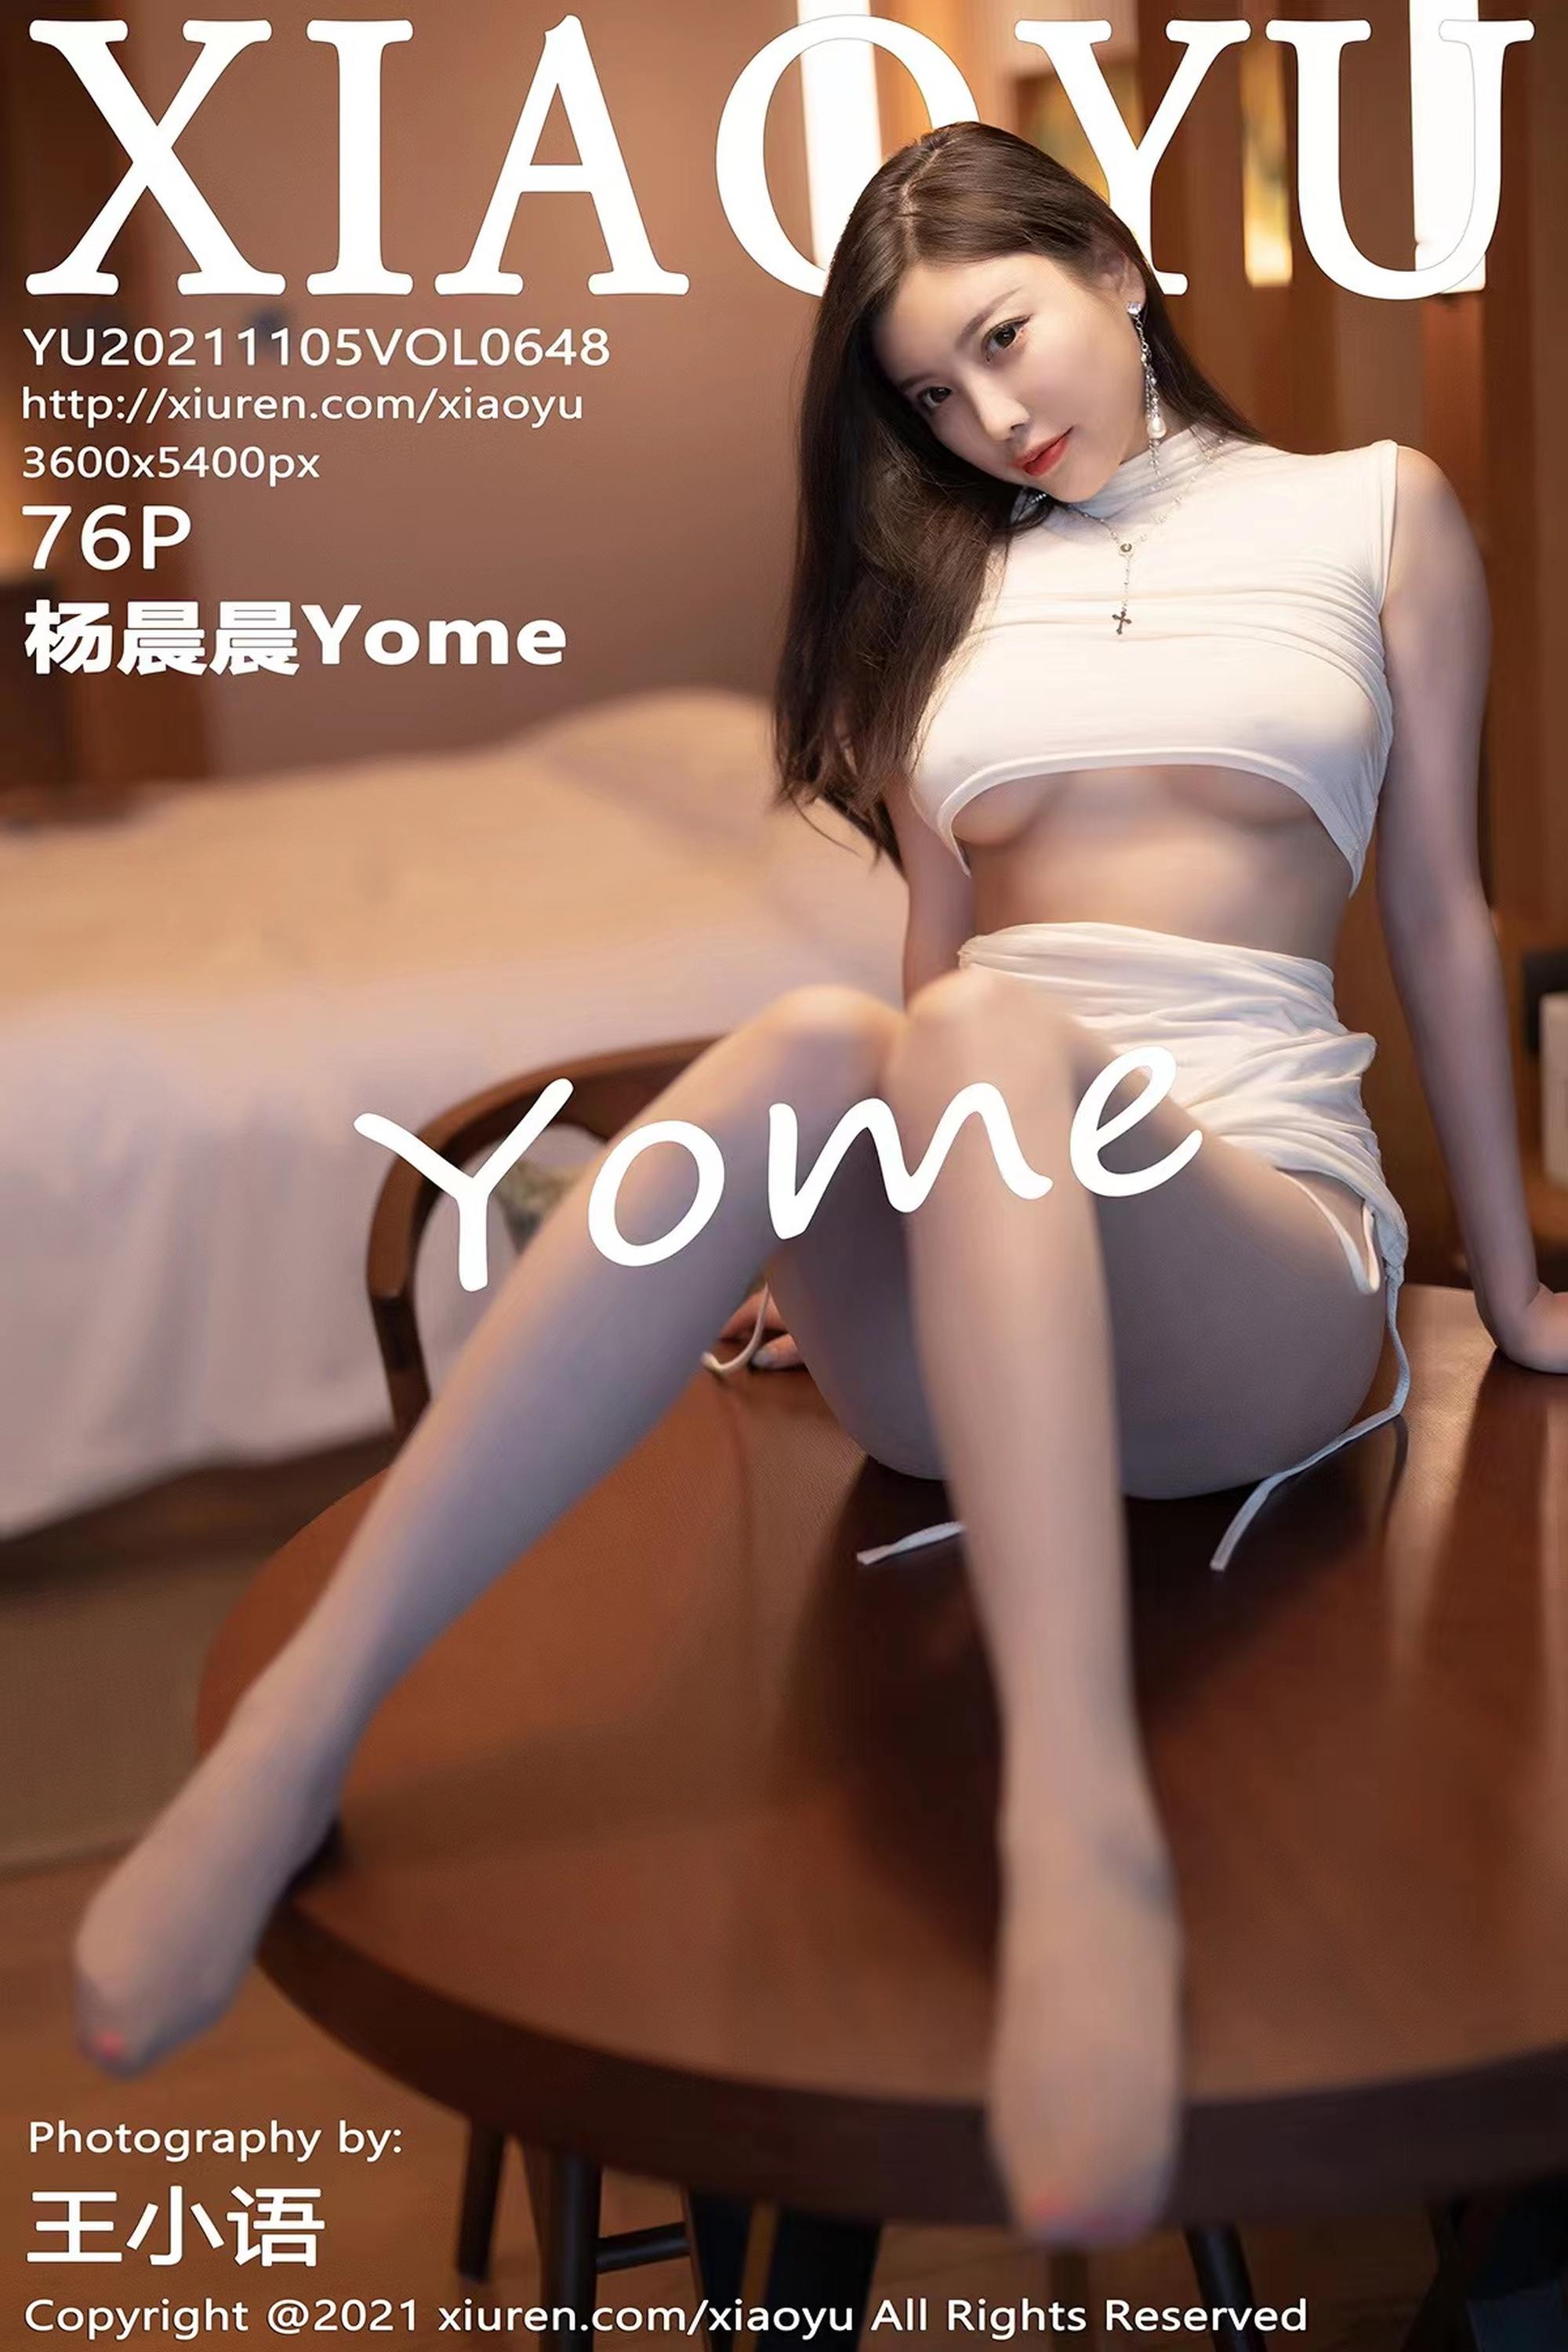 【XIAOYU畫語系列】2021.11.05 Vol.648 楊晨晨Yome完整版無水印寫真【77P】 - 貼圖 - 絲襪美腿 -